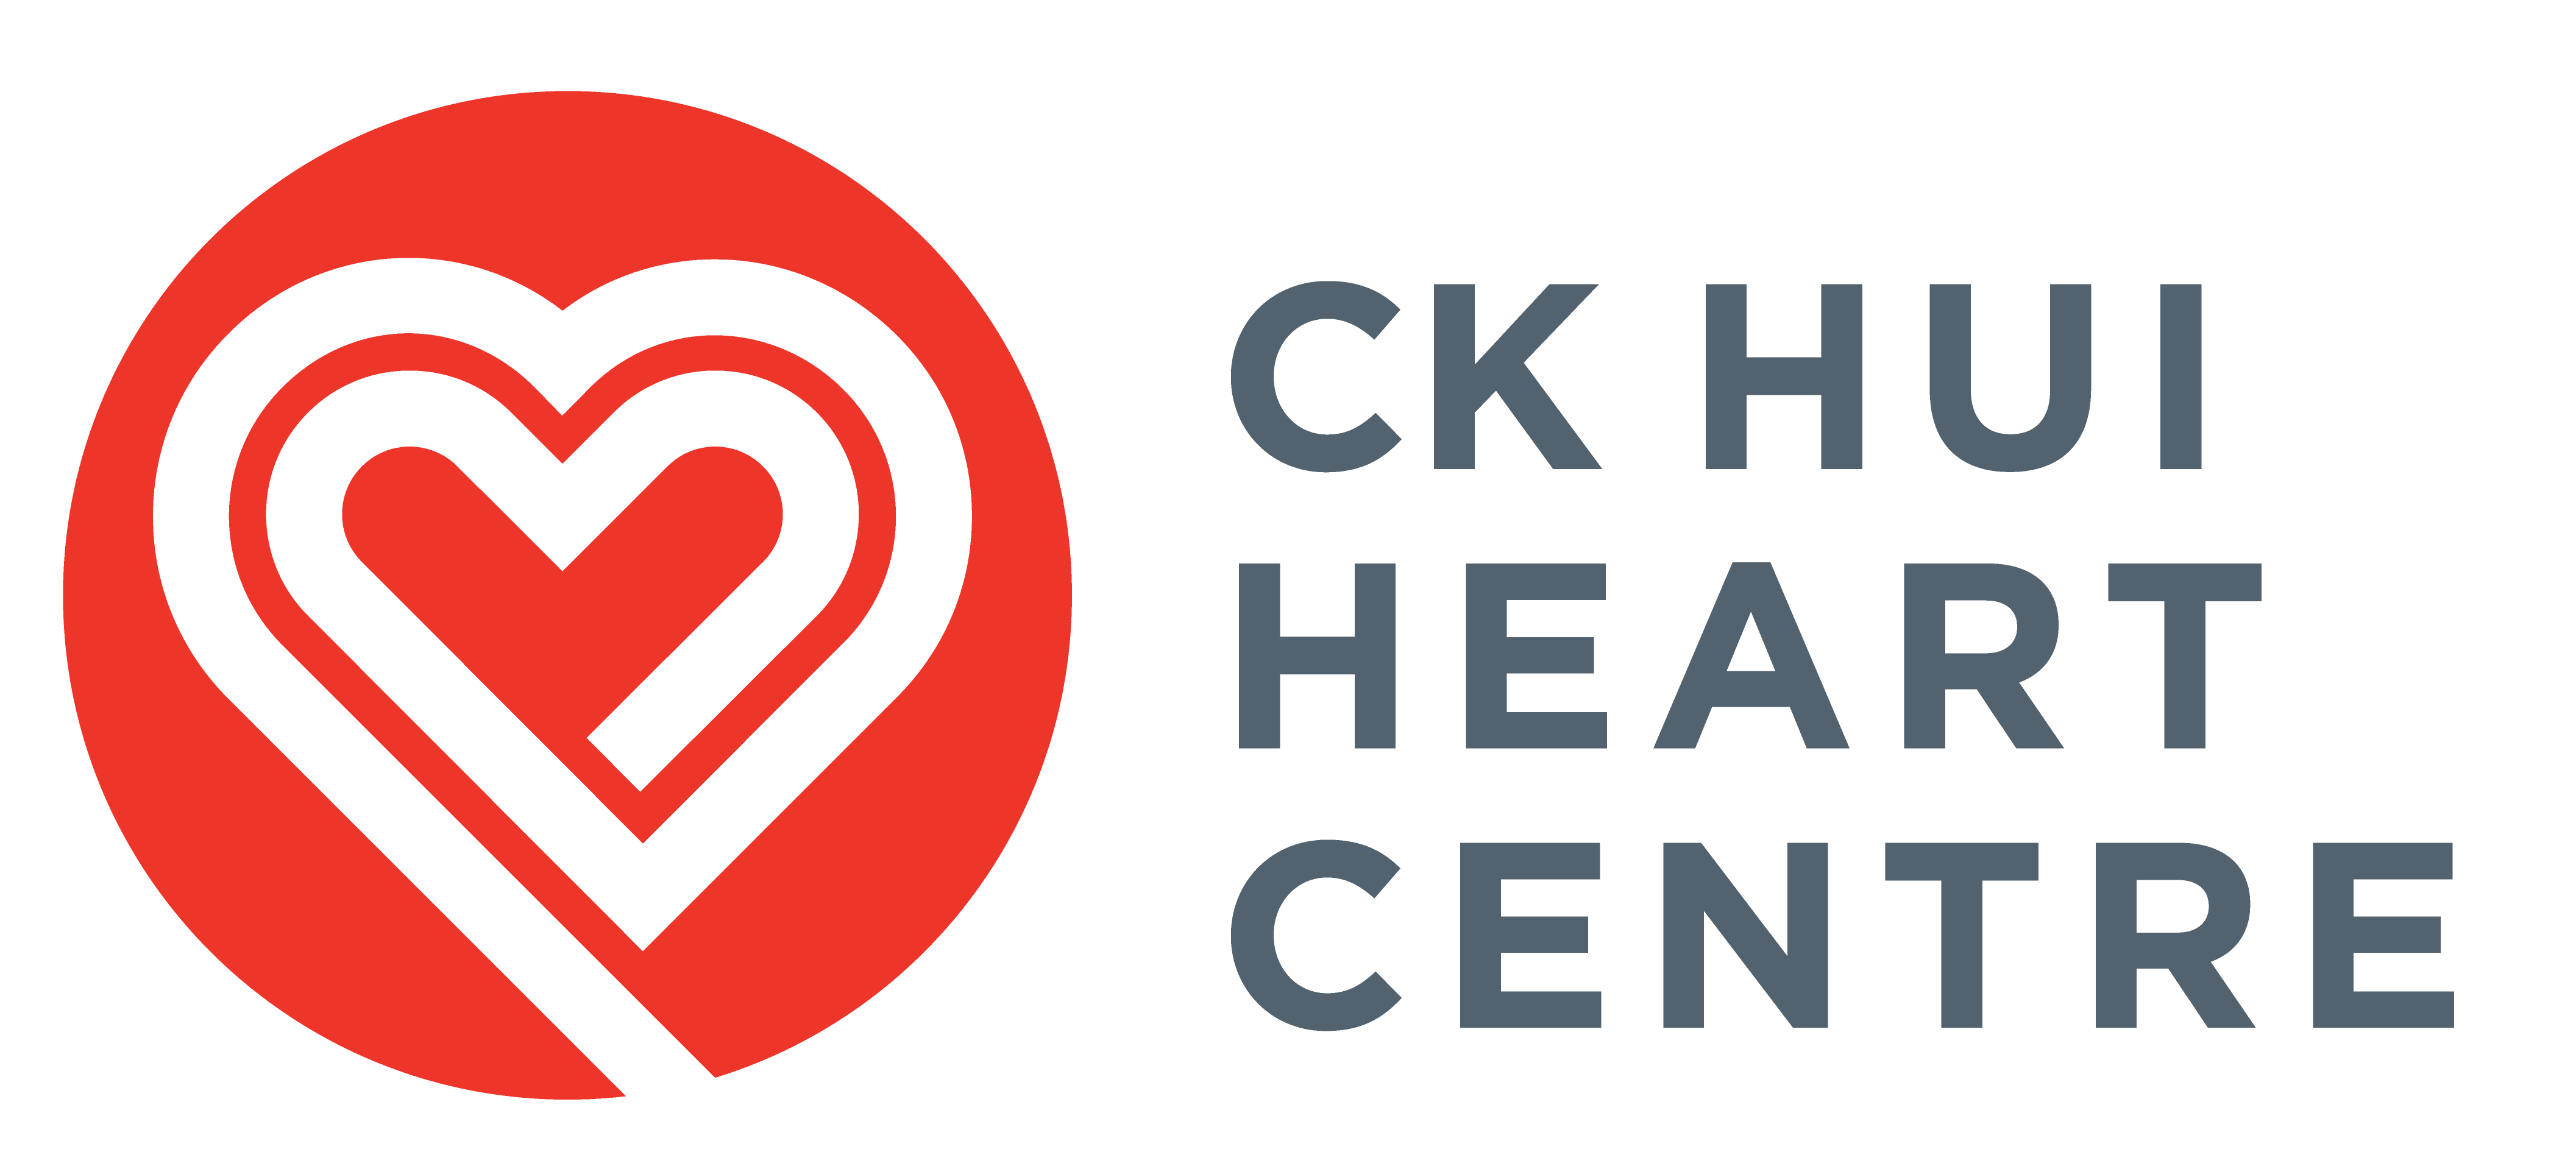 Hui Logo - CK HUI Heart Centre Logo - Kyle Loranger Design - Edmonton